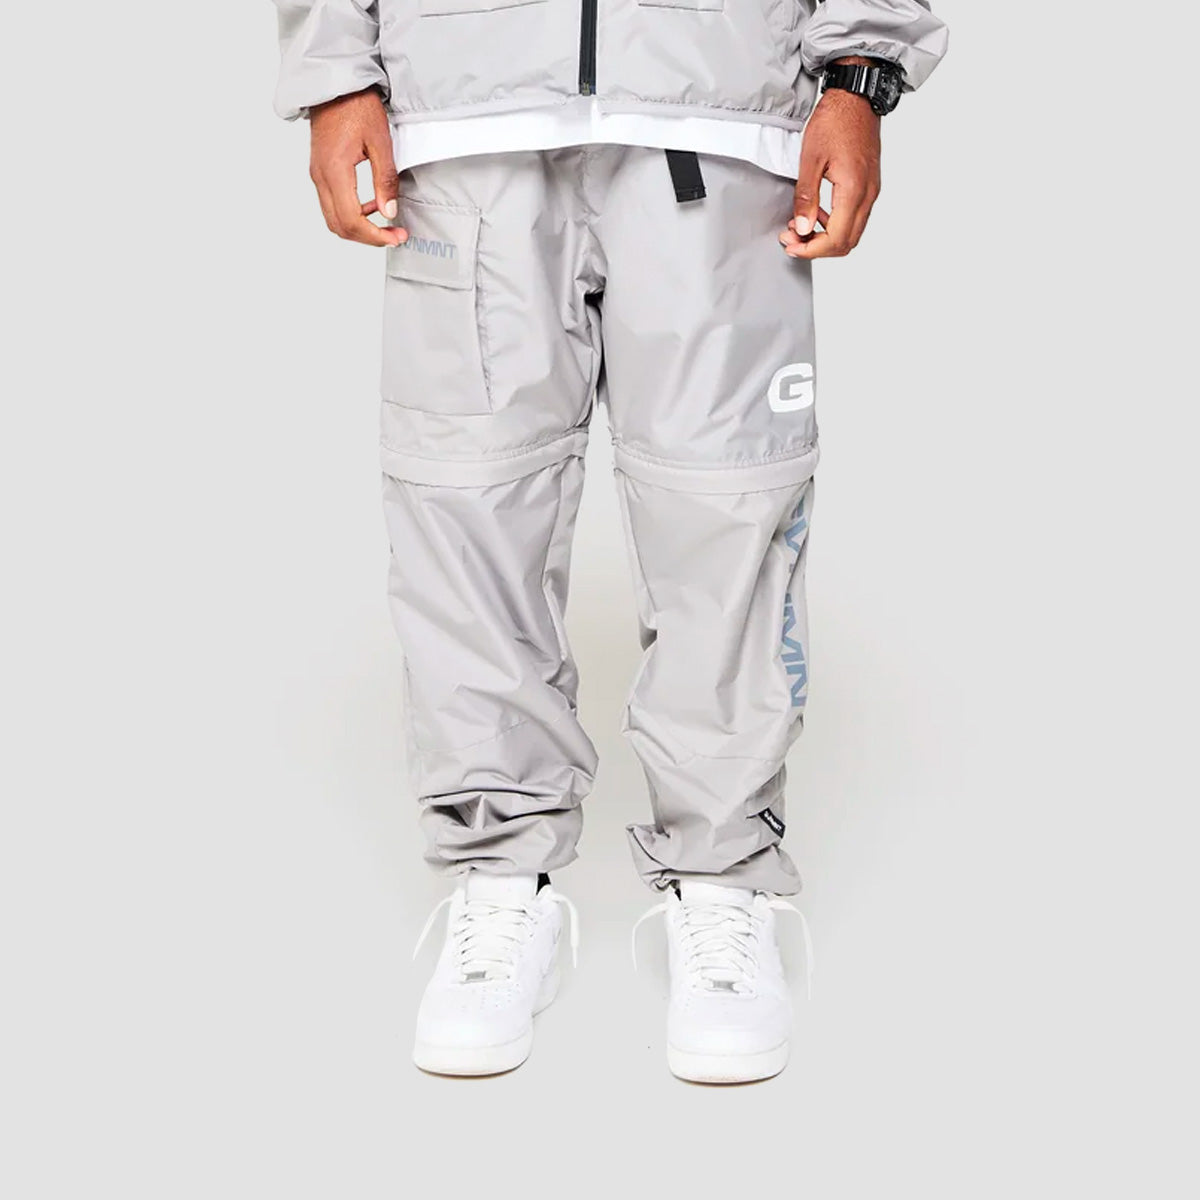 GVNMNT Hardwear 2 in 1 Cargo Pants / Shorts Grey